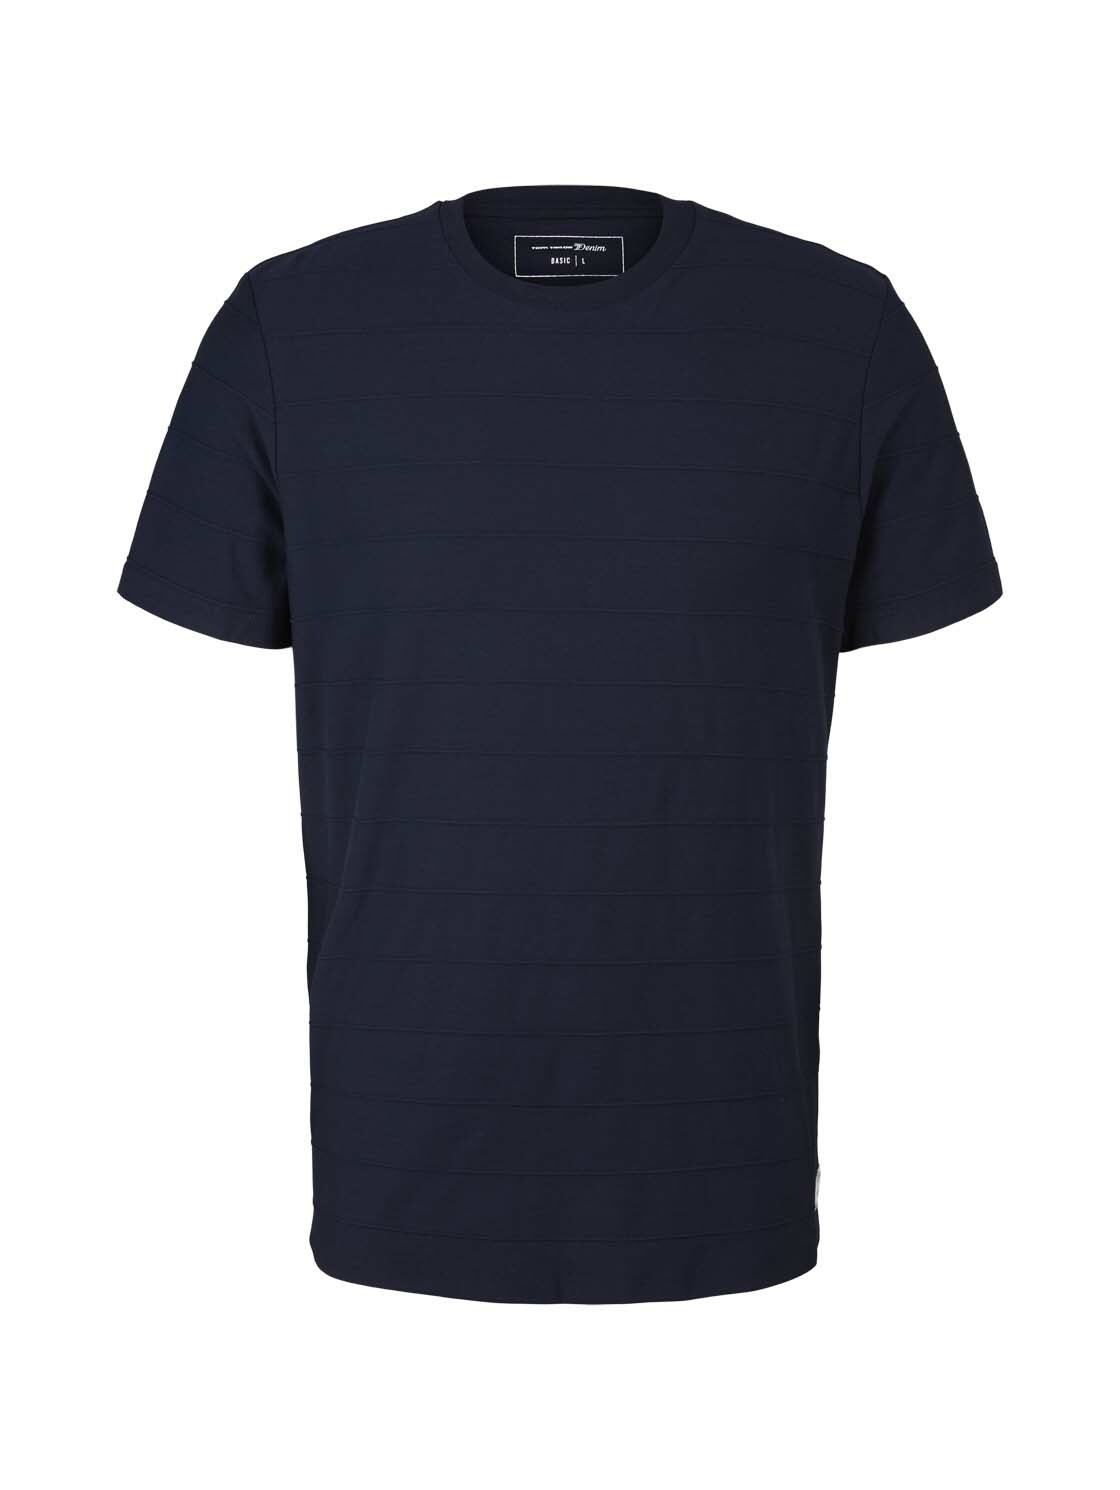 TOM TAILOR DENIM T-Shirt in Nachtblau 